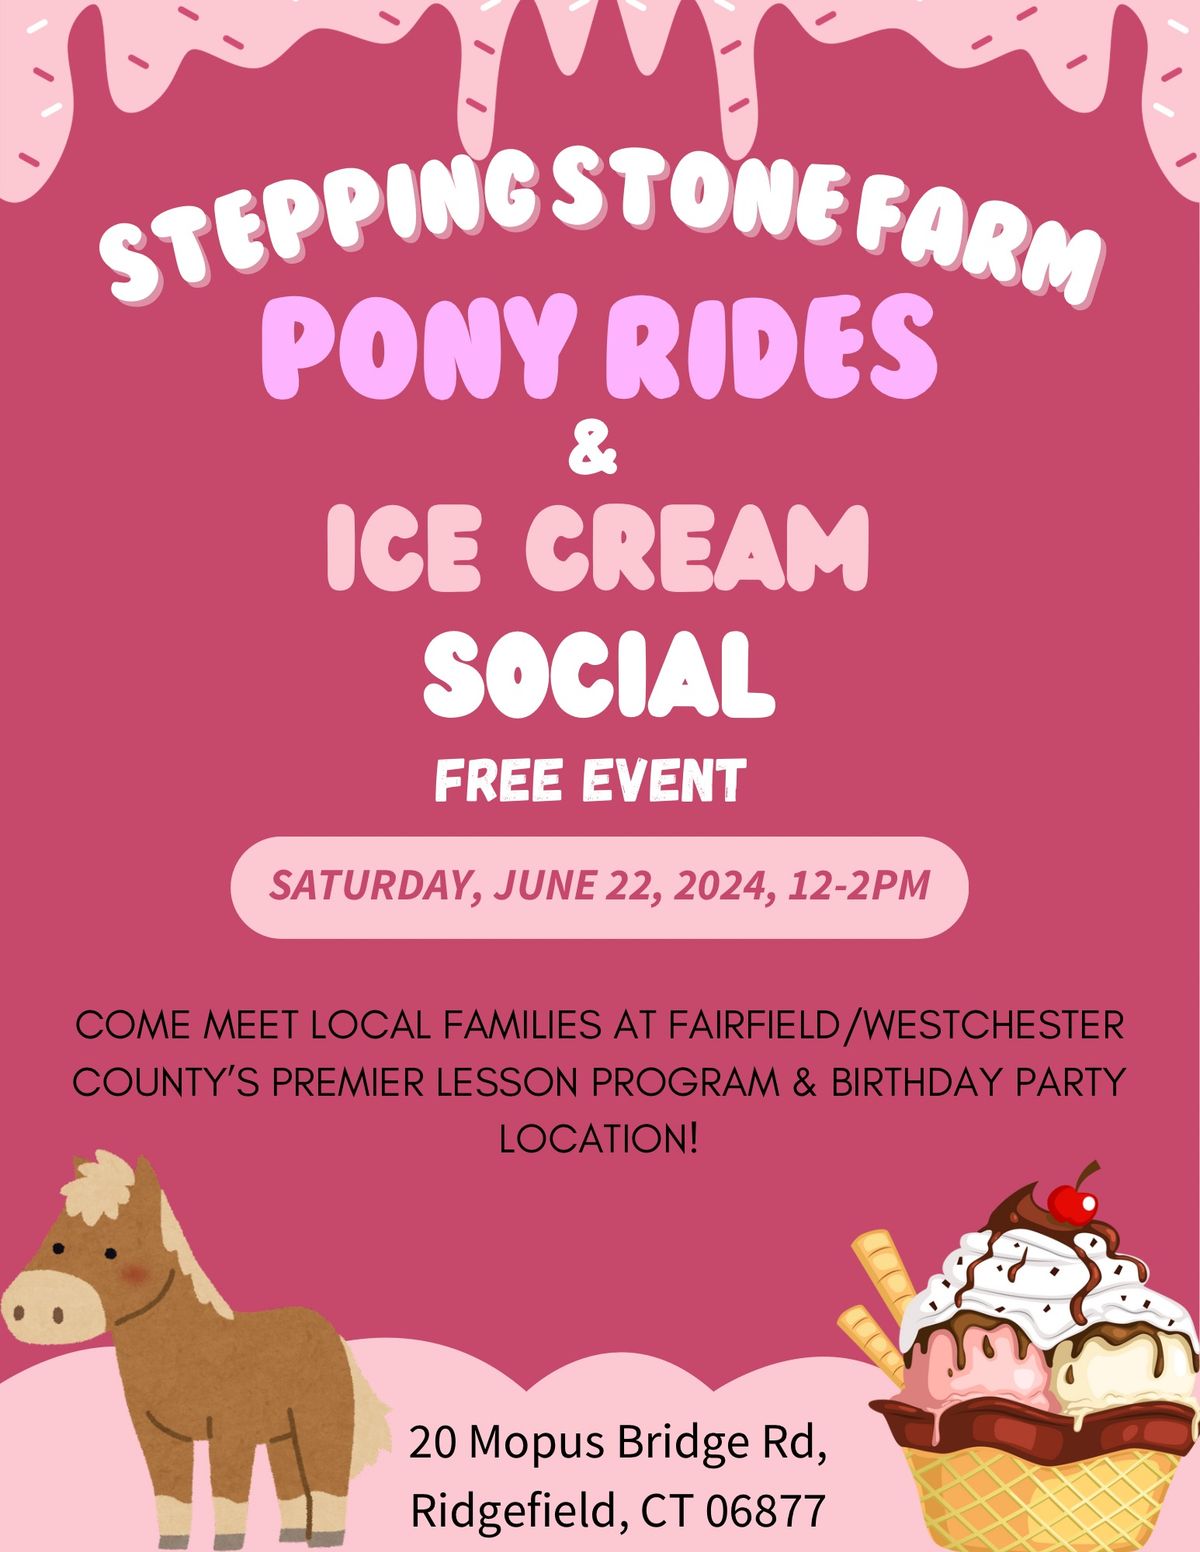 Pony rides & ice cream social 